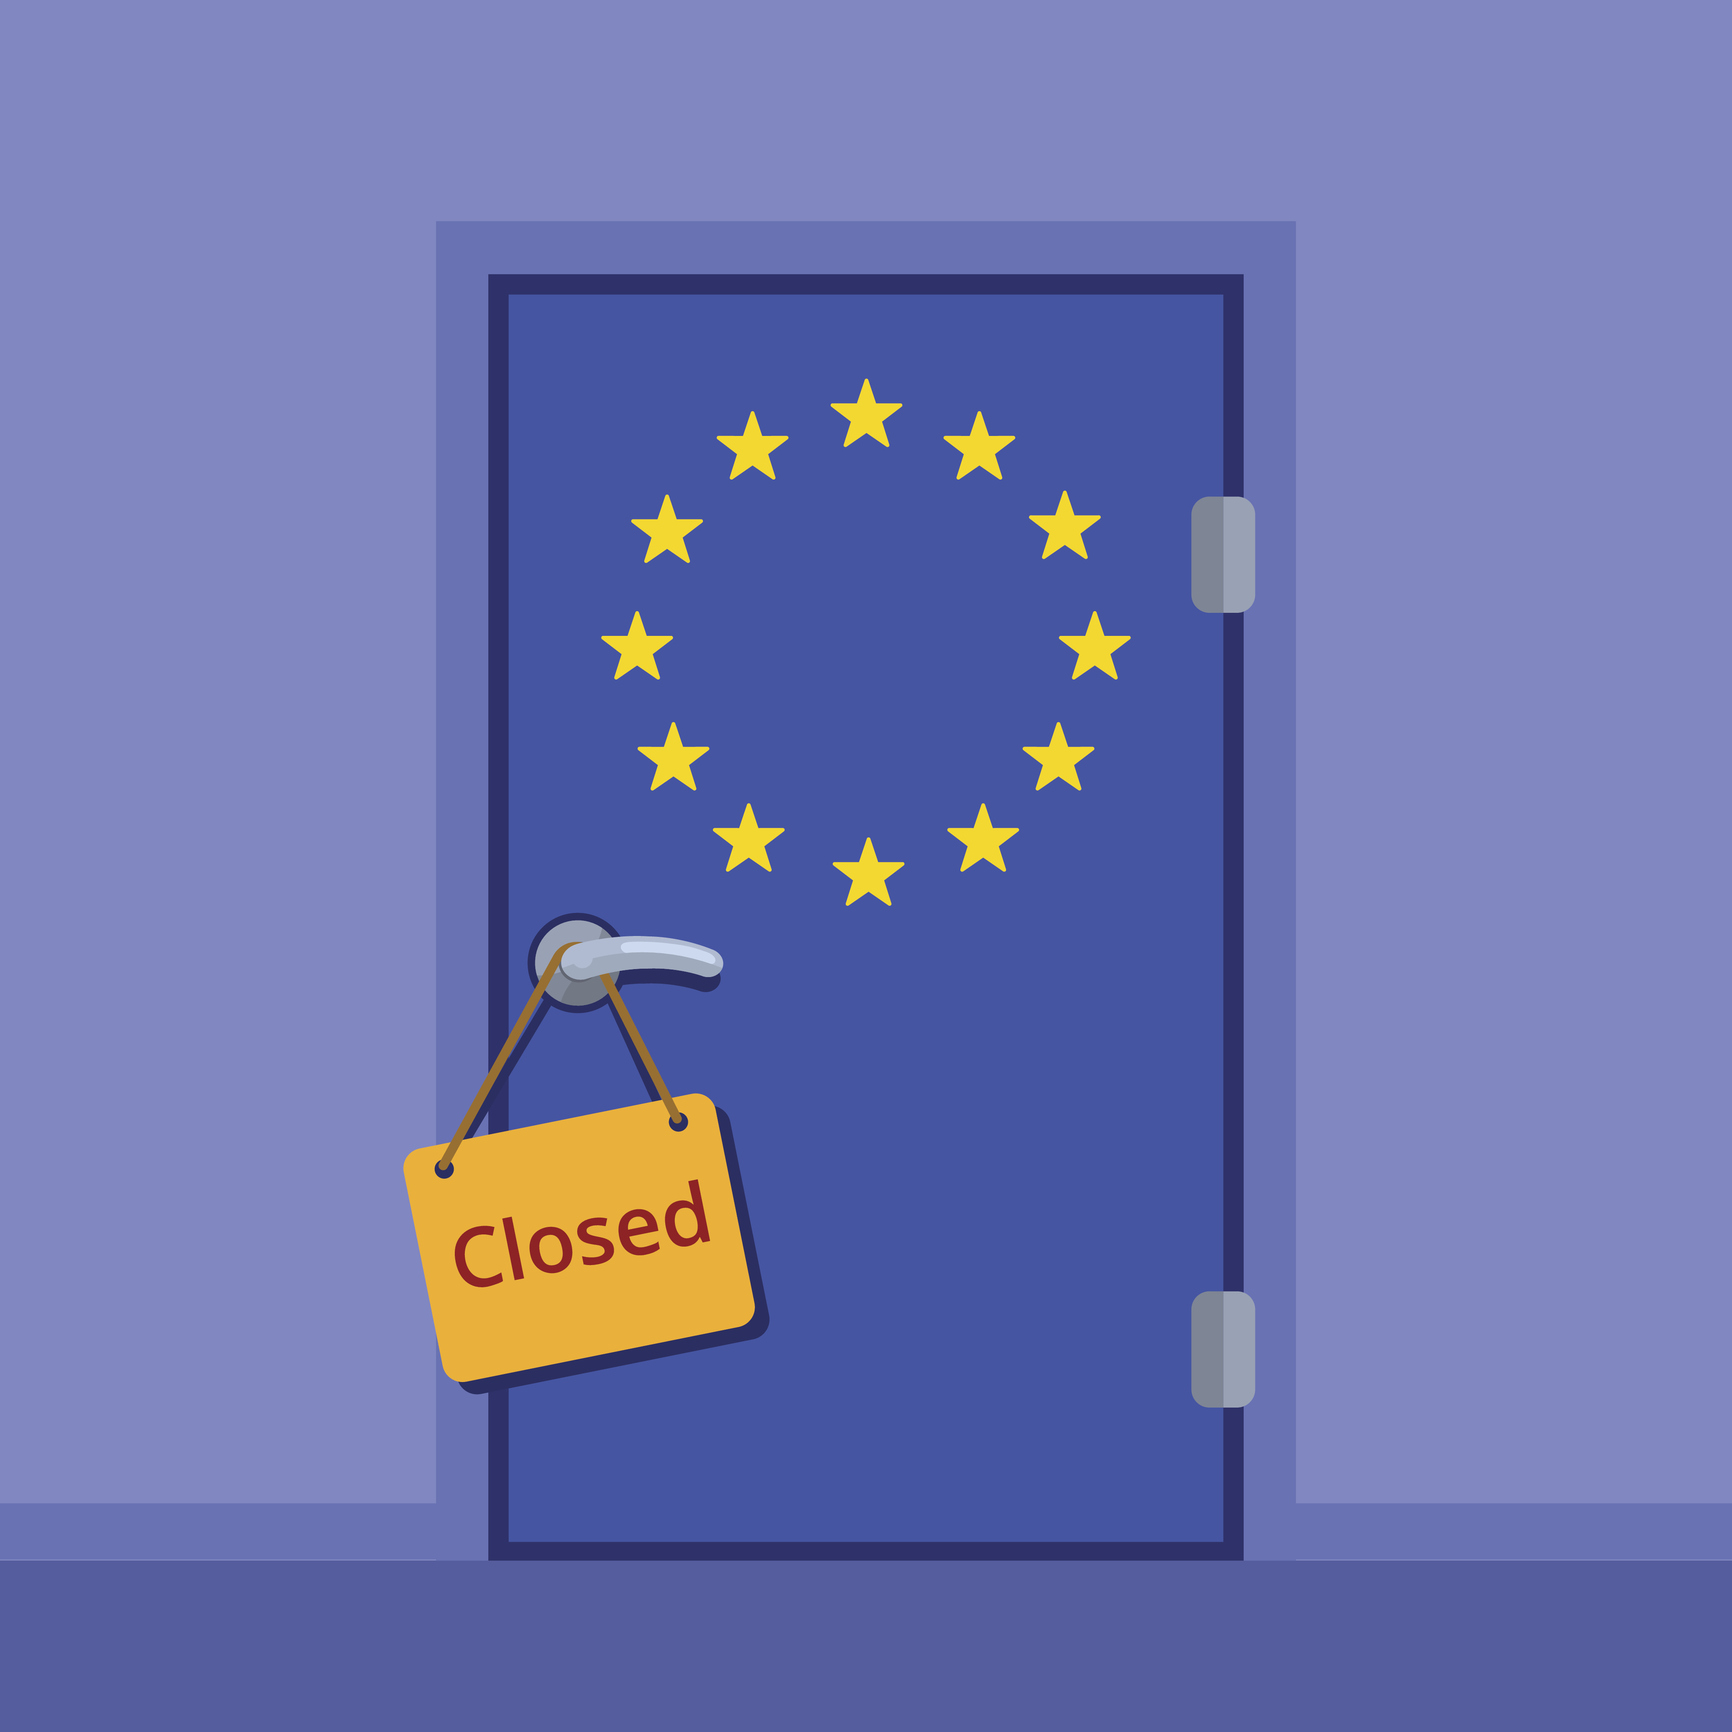 Do not disturb plate on the door handle. European Union closed door flat color vector illustration. EU stars flag cartoon image.